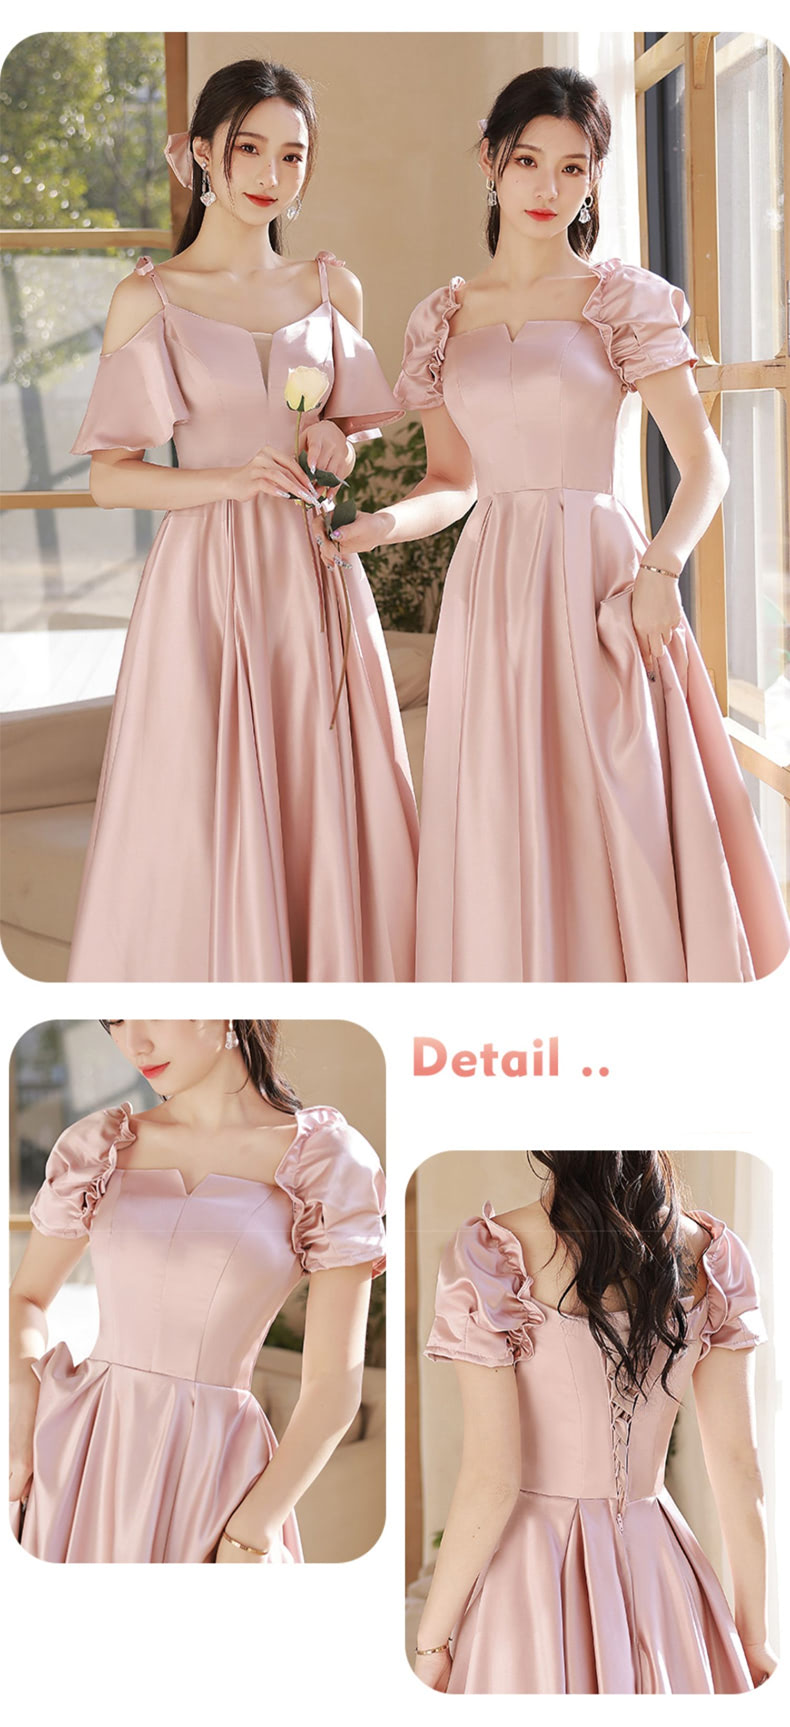 Simple-Pink-Satin-Prom-Evening-Homecoming-Bridesmaid-Dress16.jpg